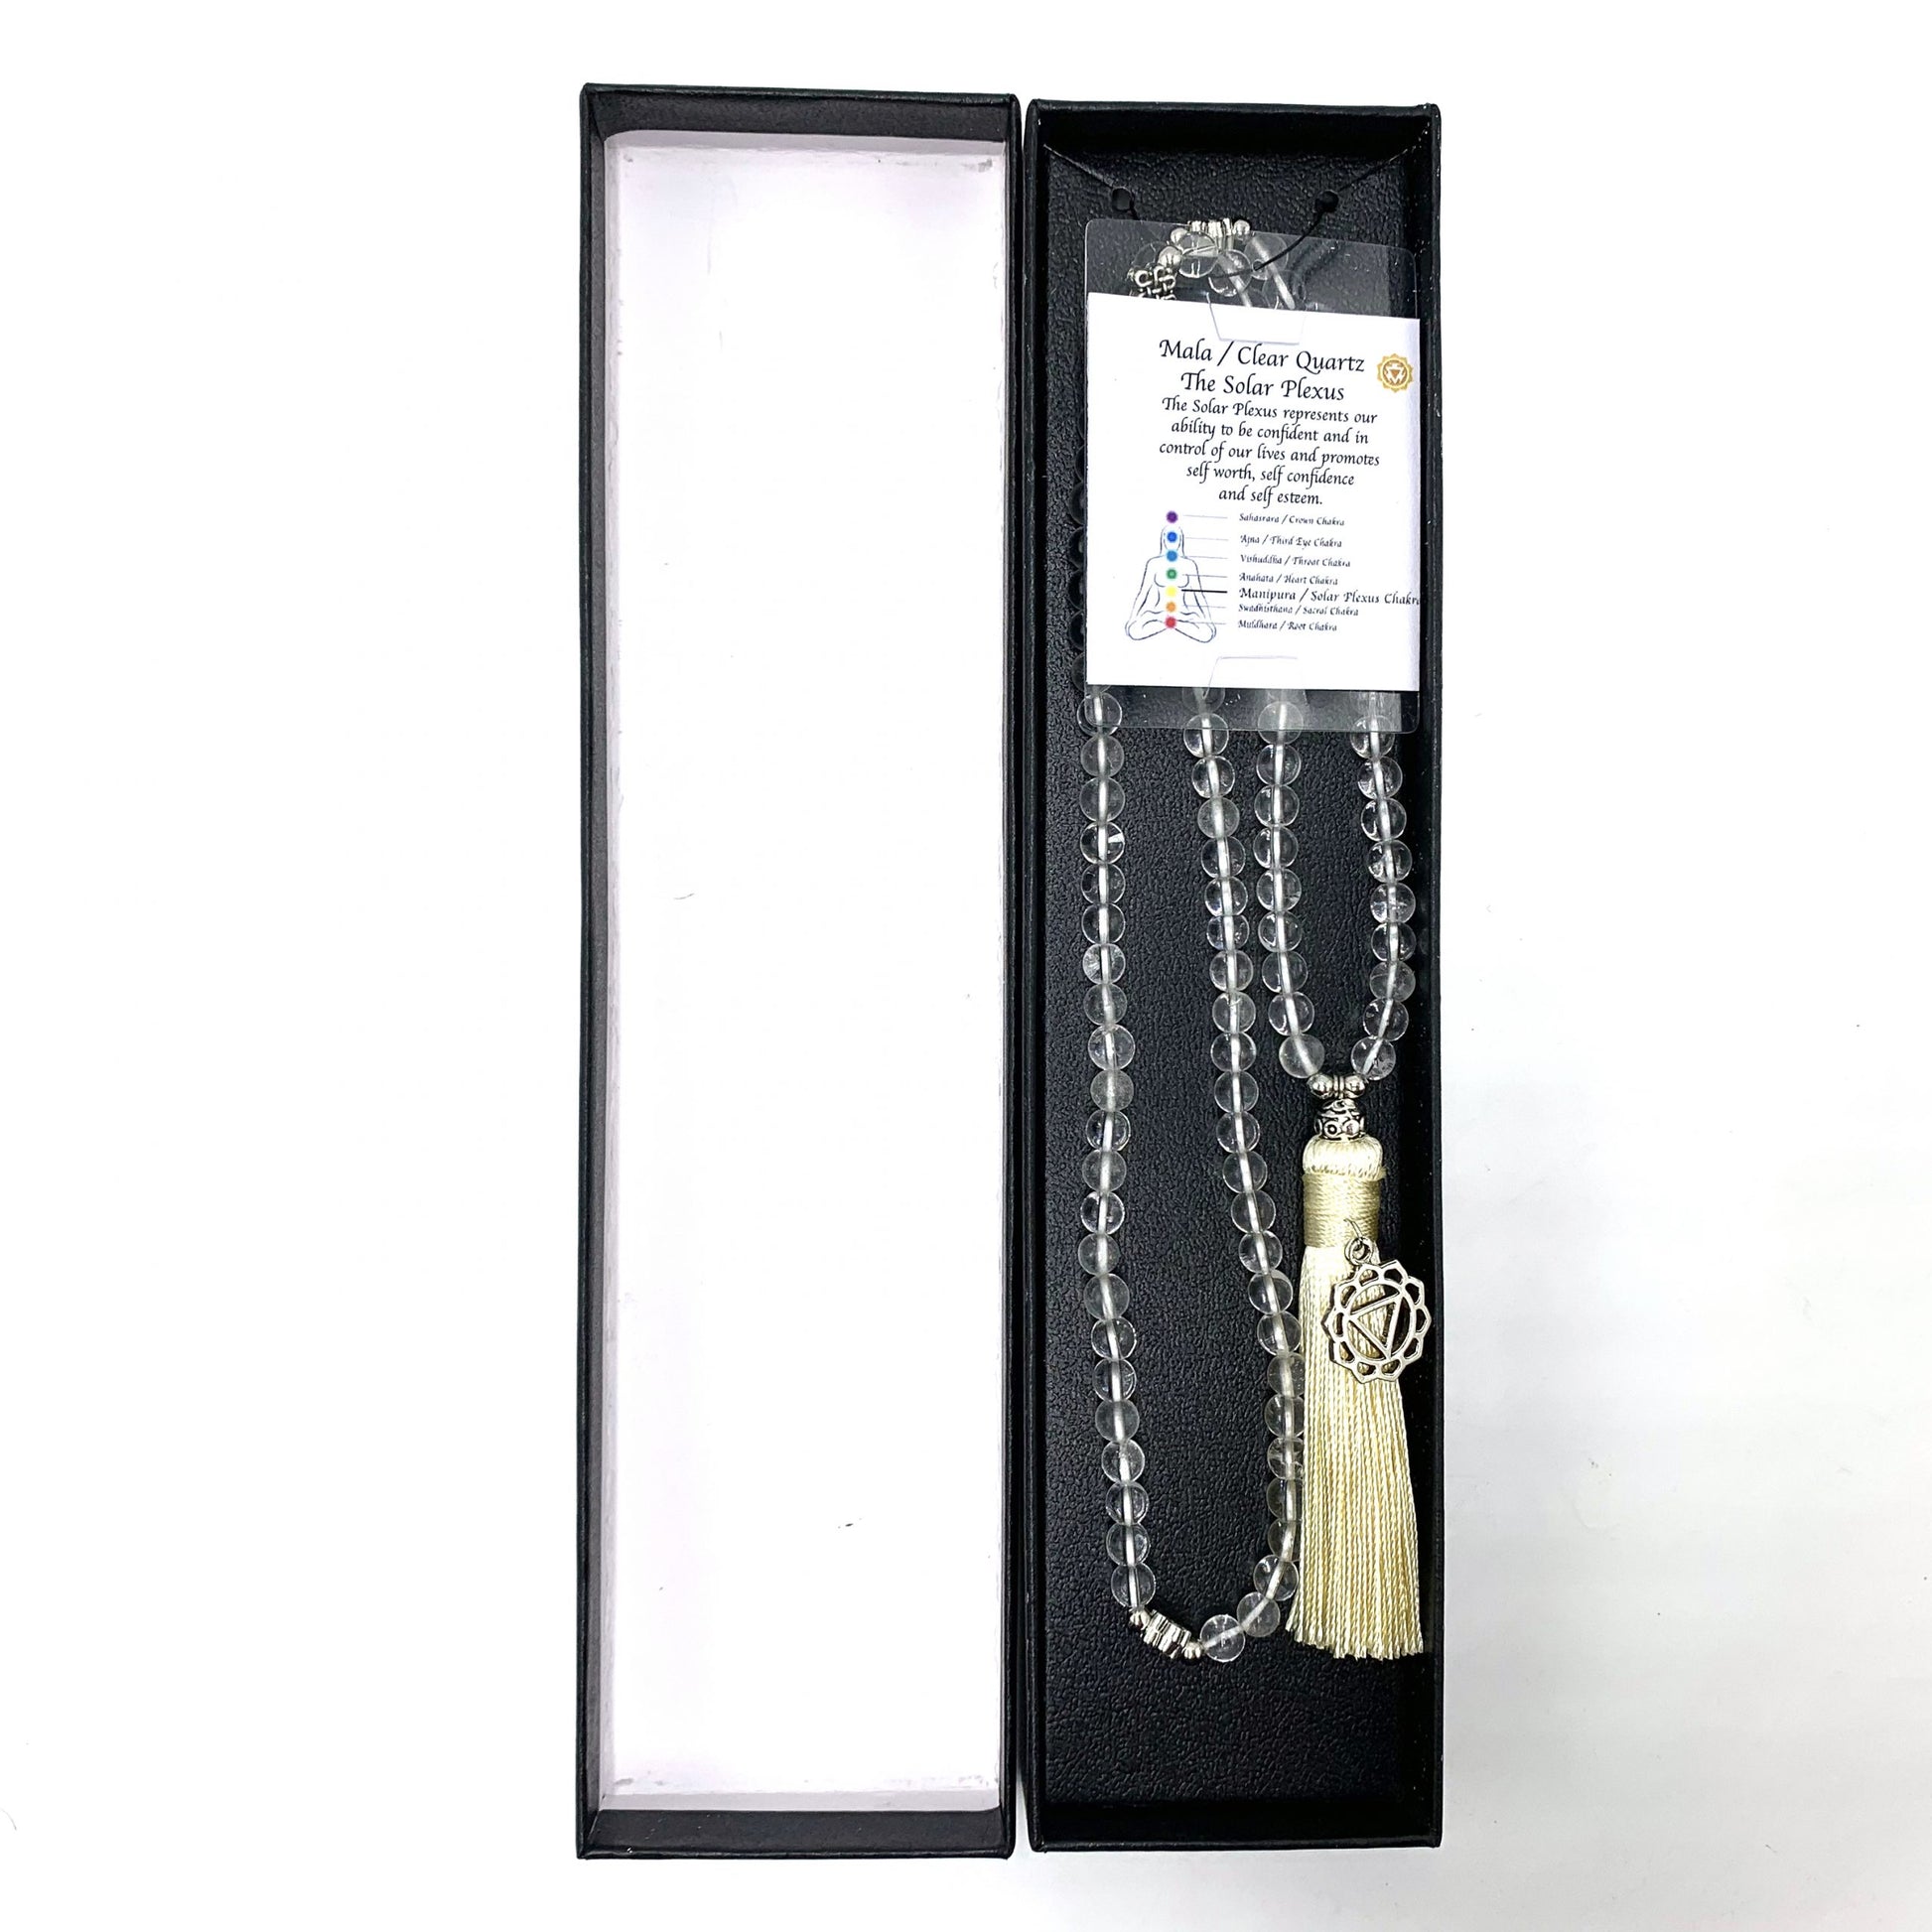 Clear Quartz Mala Beads with Solar Plexus Chakra Charm- 108 Beads - Rivendell Shop